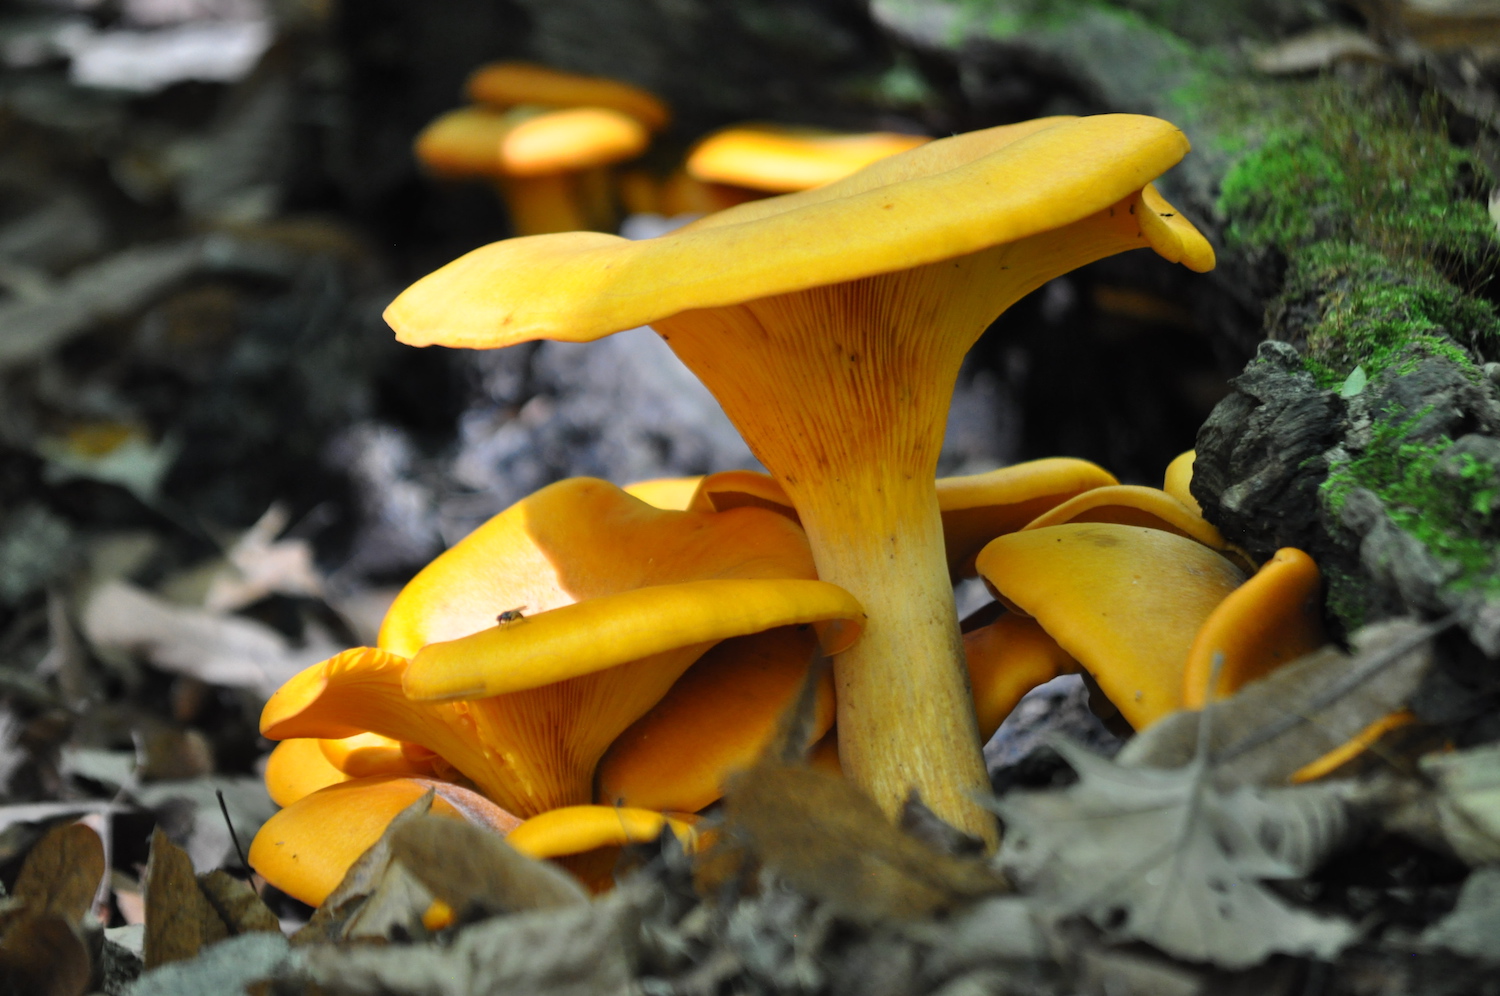 Jack-o'-lantern mushrooms growing on the ground.